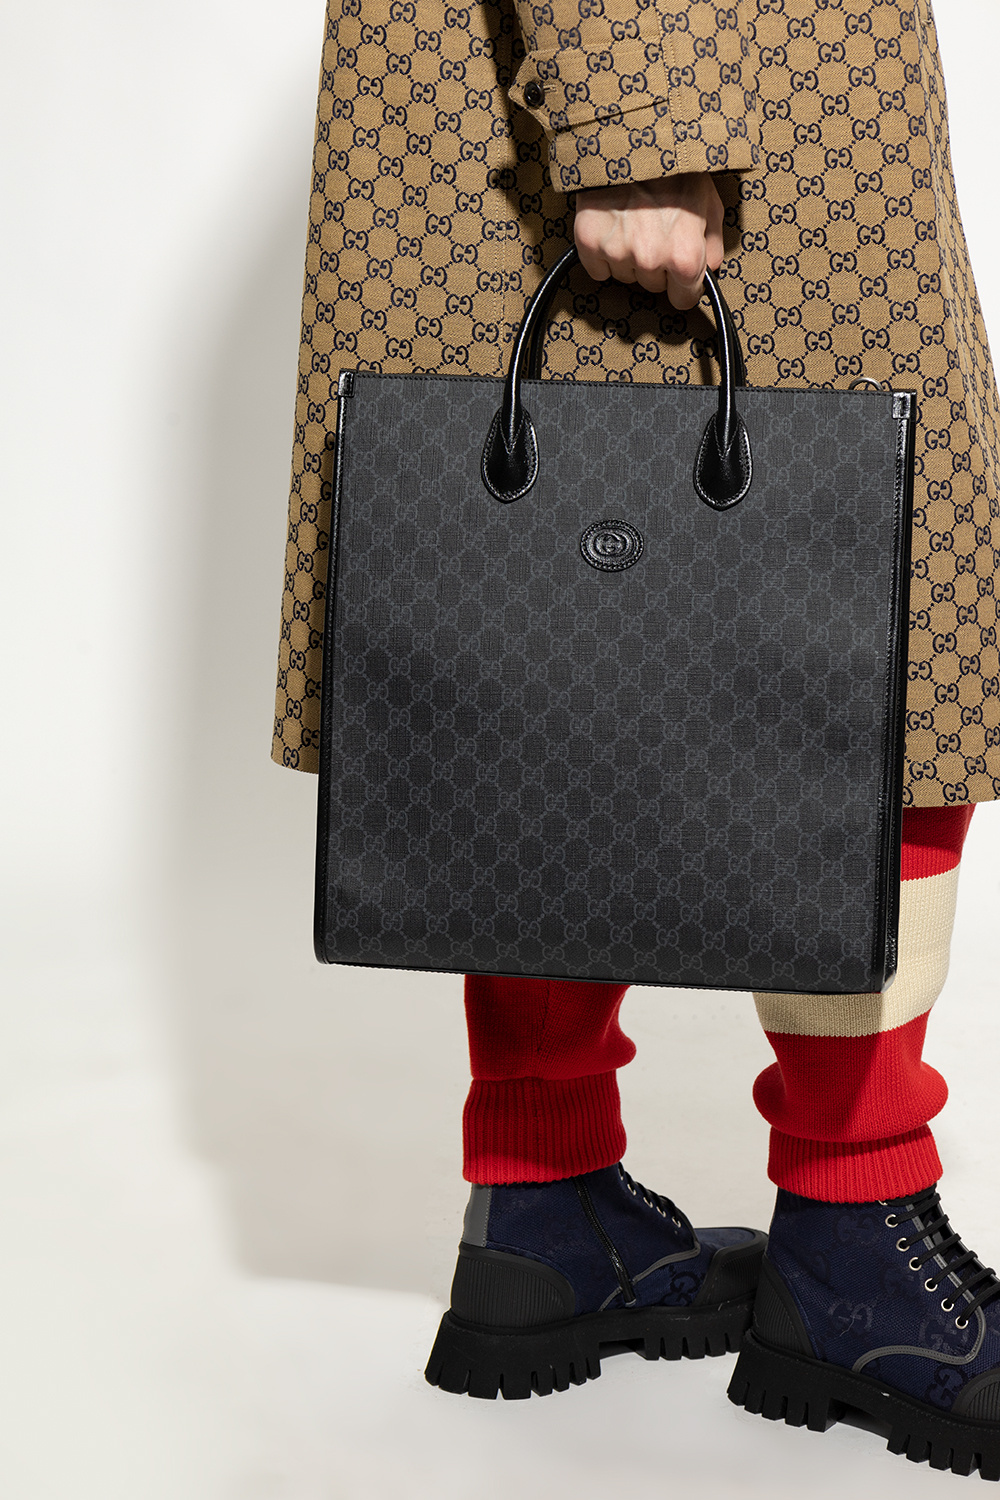 Gucci ‘GG Retro Medium’ shopper bag